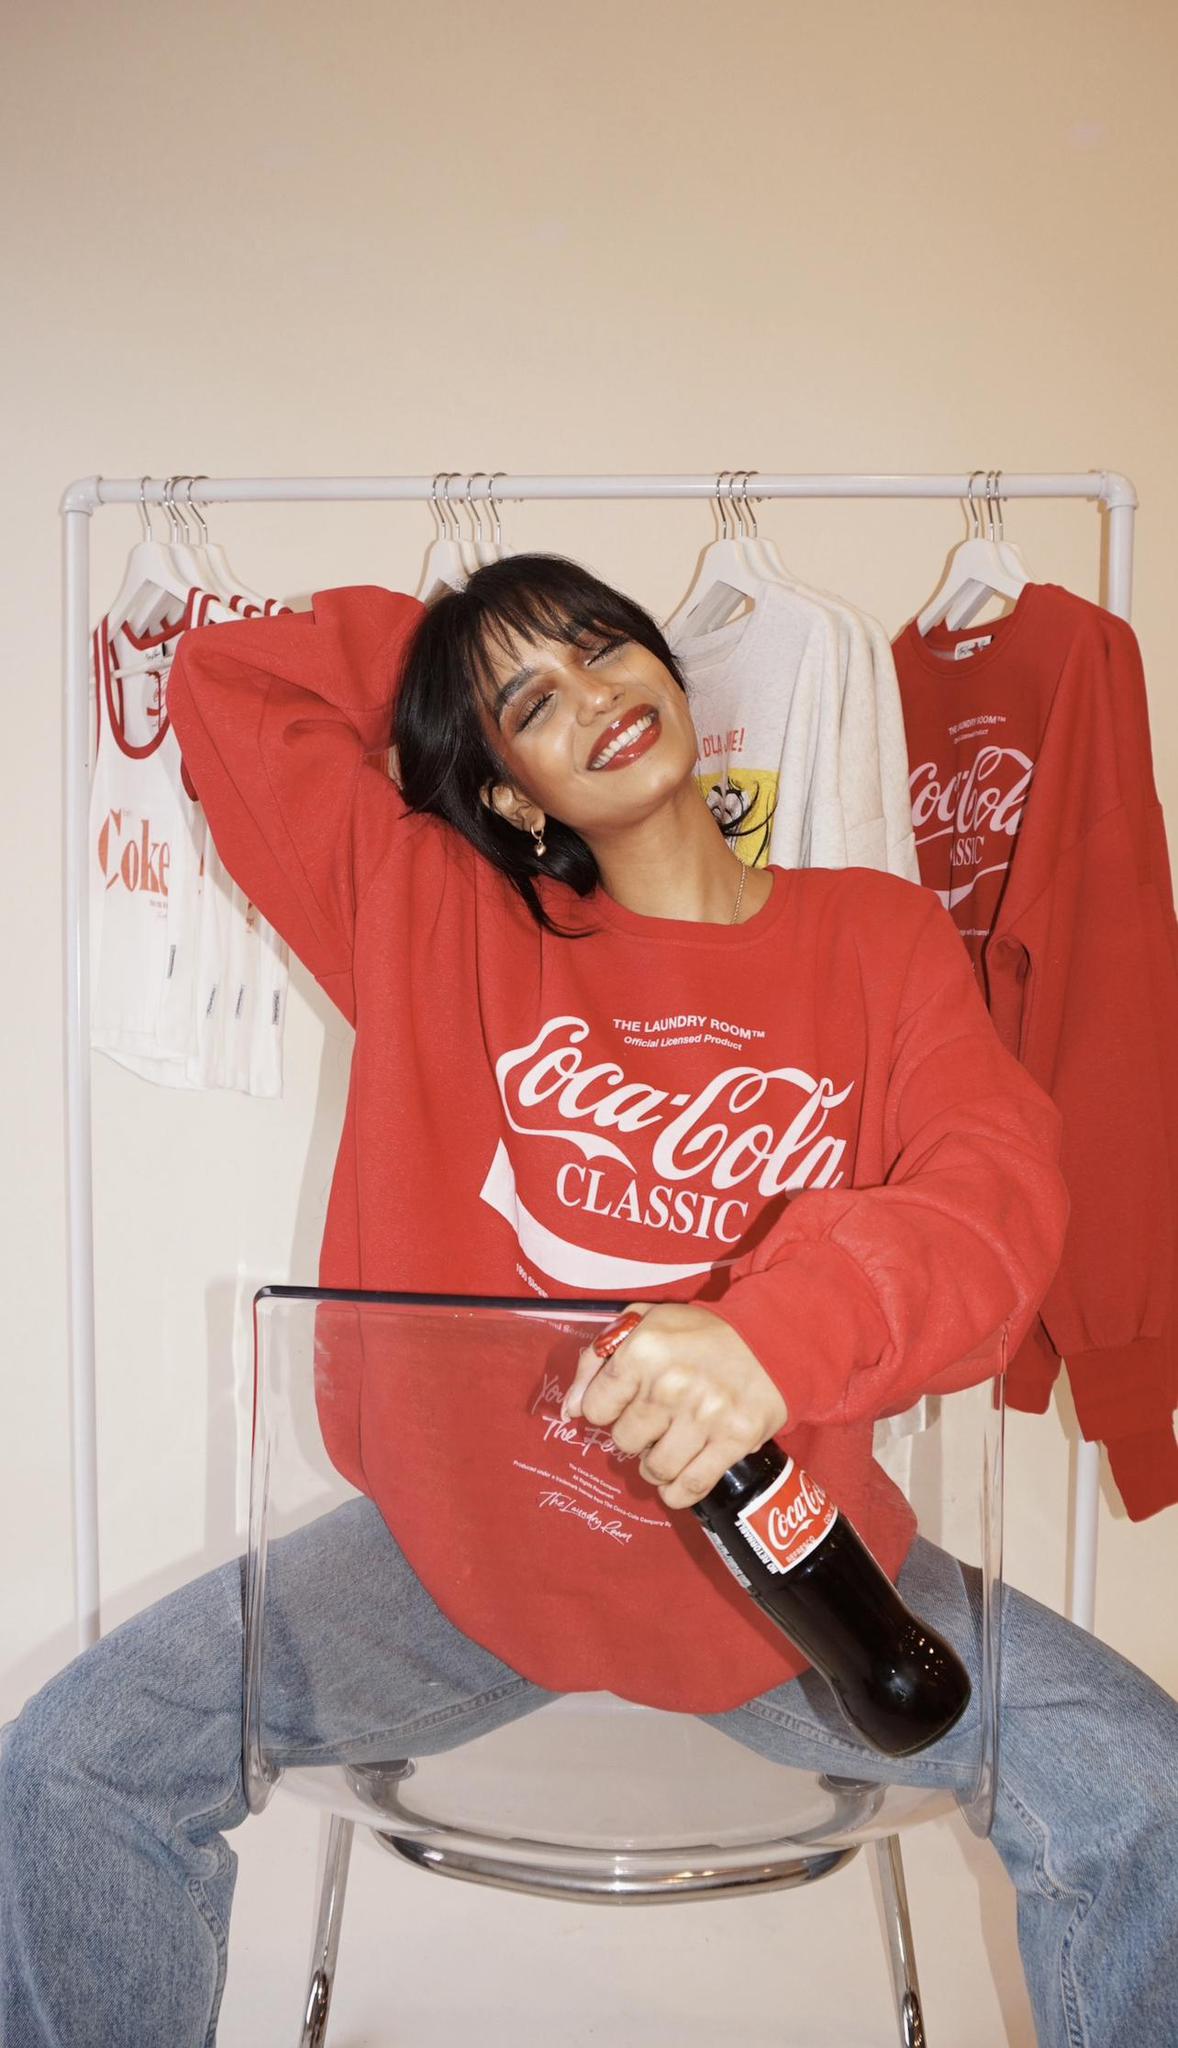 The Laundry Room Coca Cola Crewneck Sweatshirt